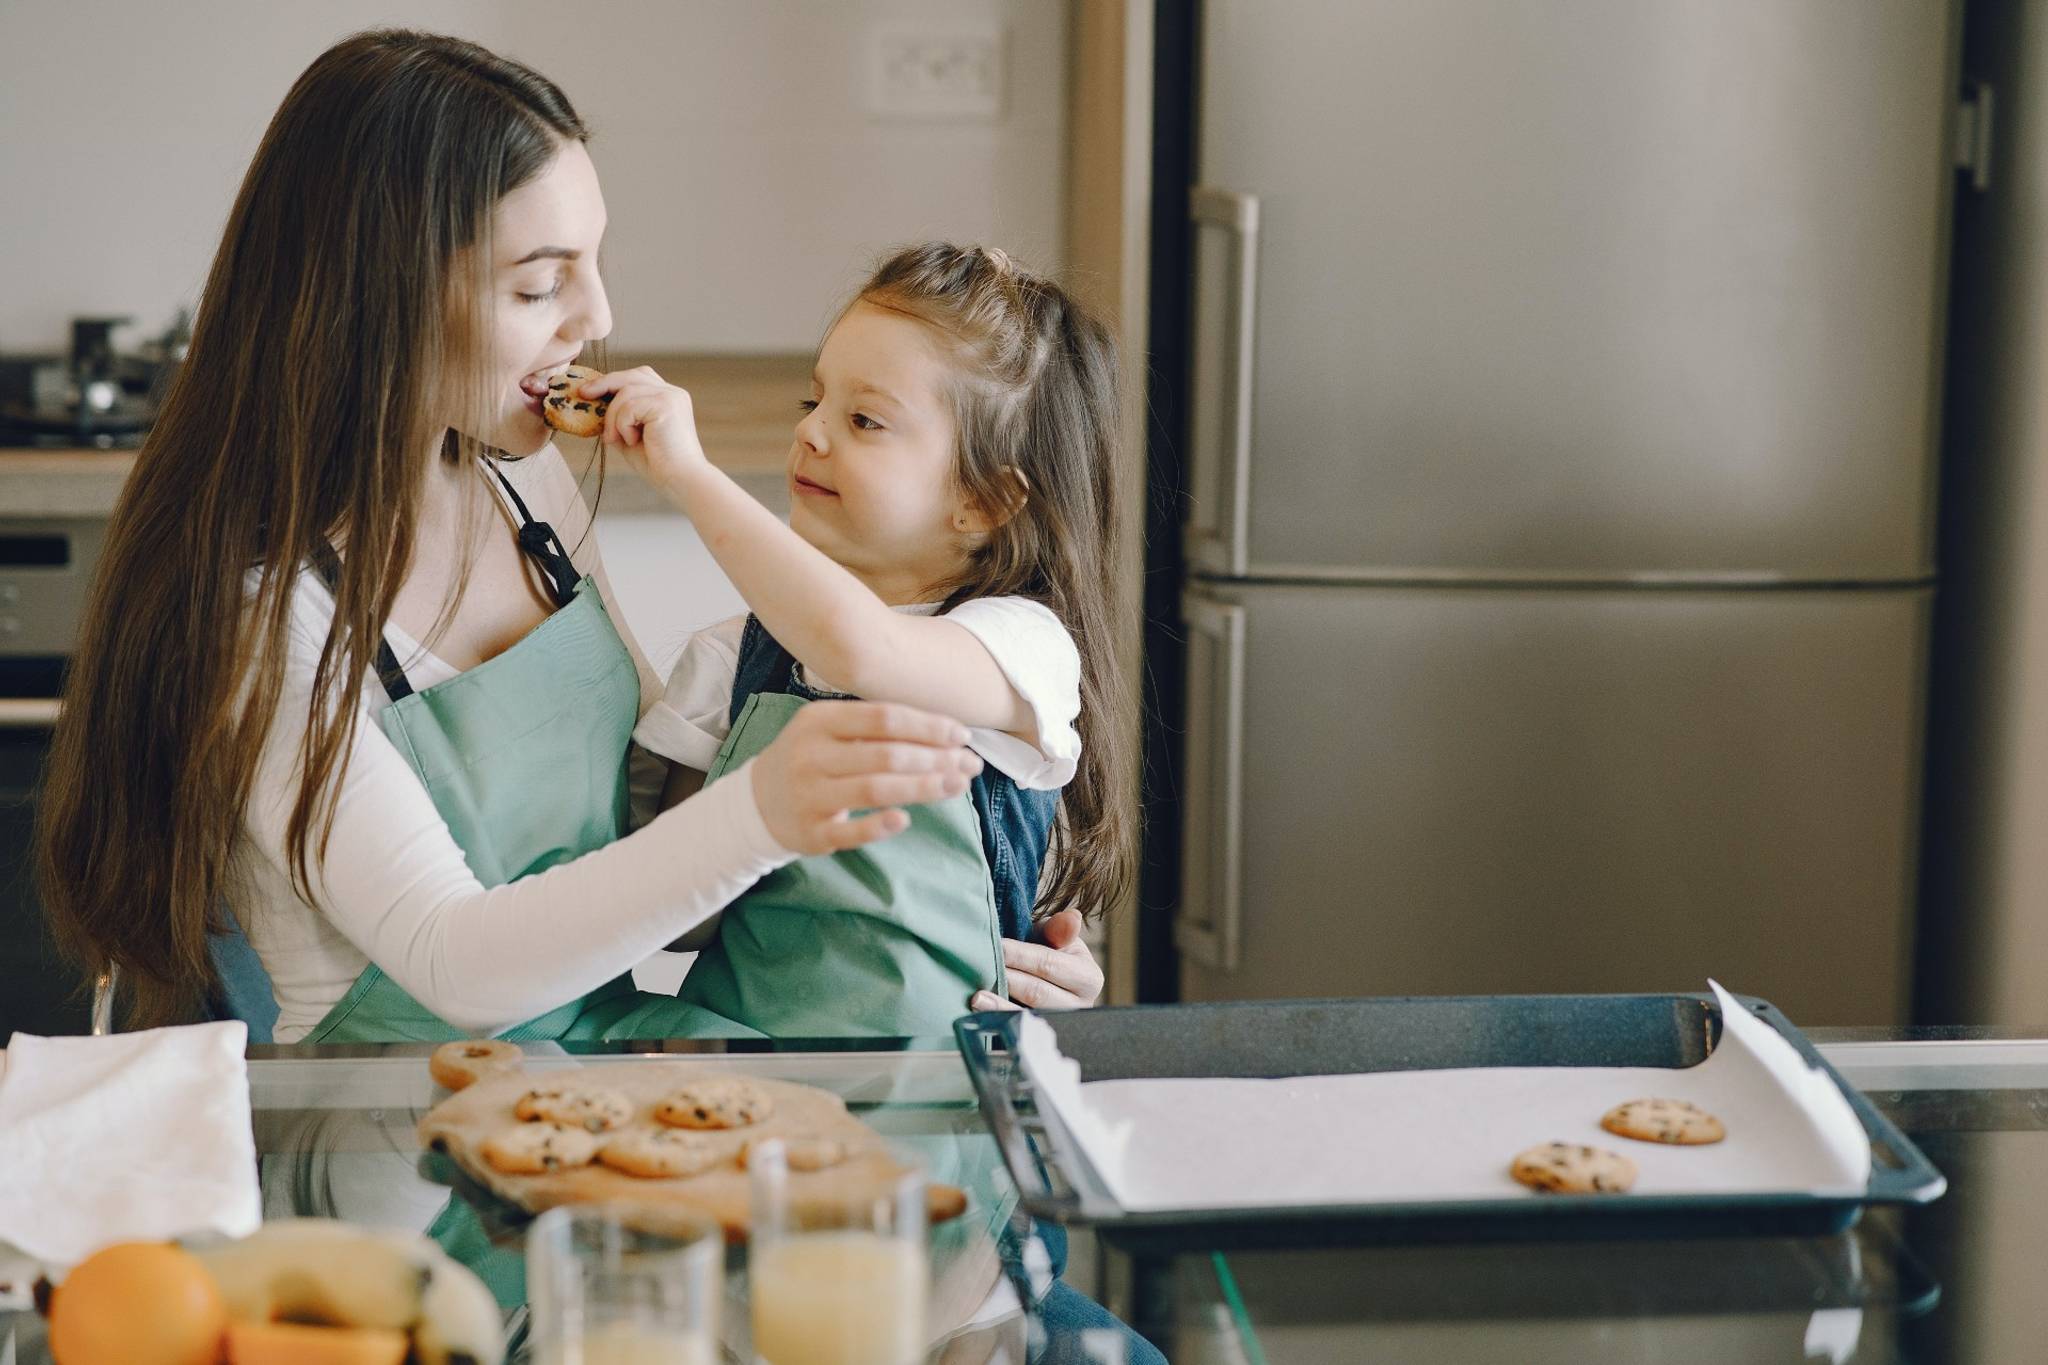 Nestlé's AI 'cookie coach' offers friendly baking tips